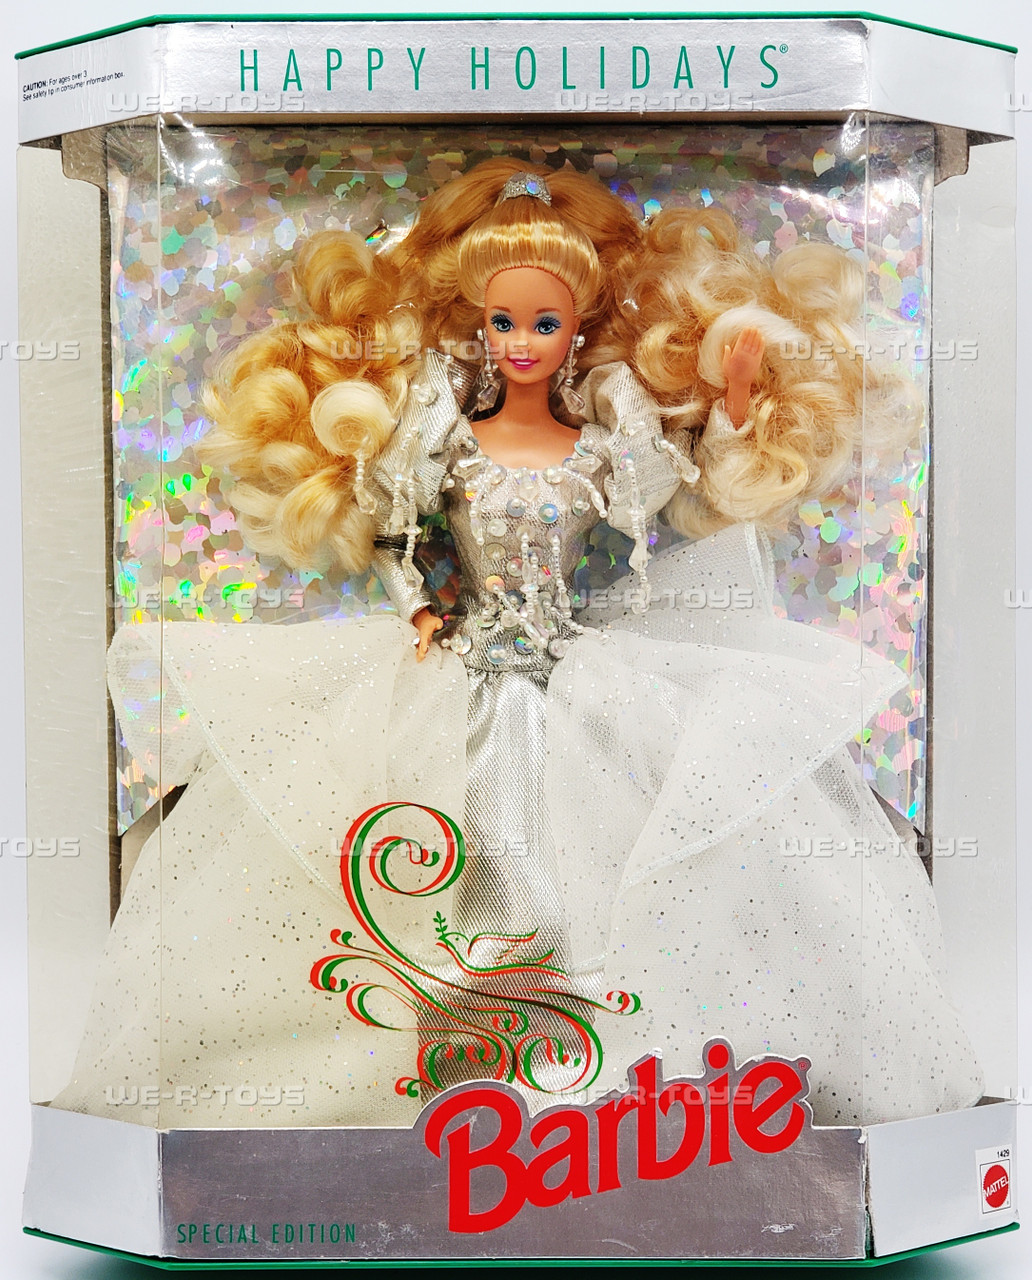 1992 Happy Holidays Barbie Doll Mattel No. 1429 NEW - We-R-Toys